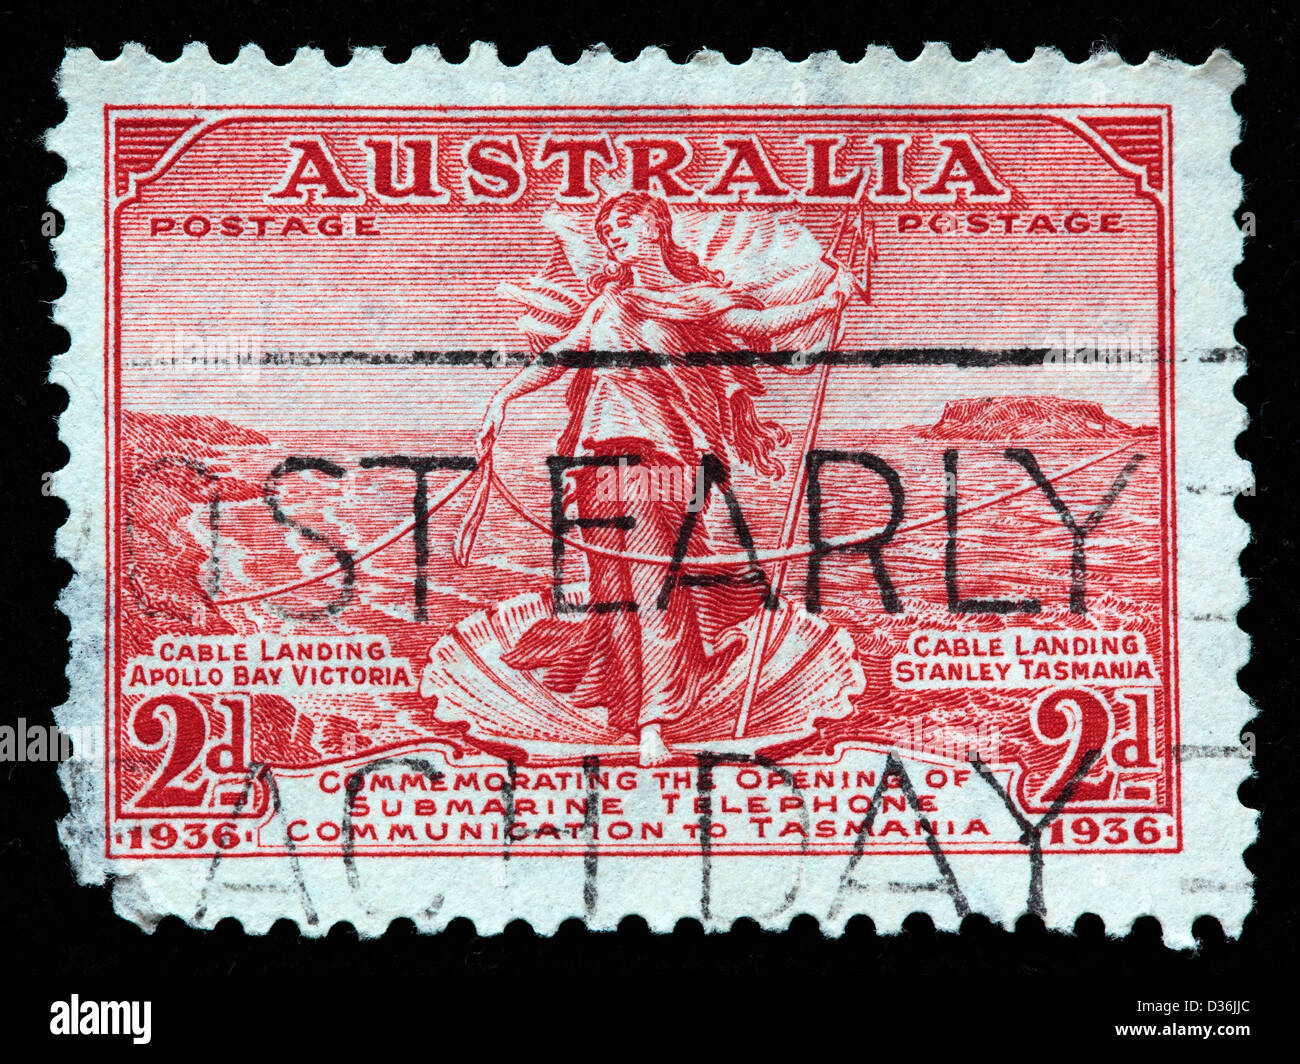 Australia Tasmania telephone link, postage stamp, Australia, 1936 Stock Photo